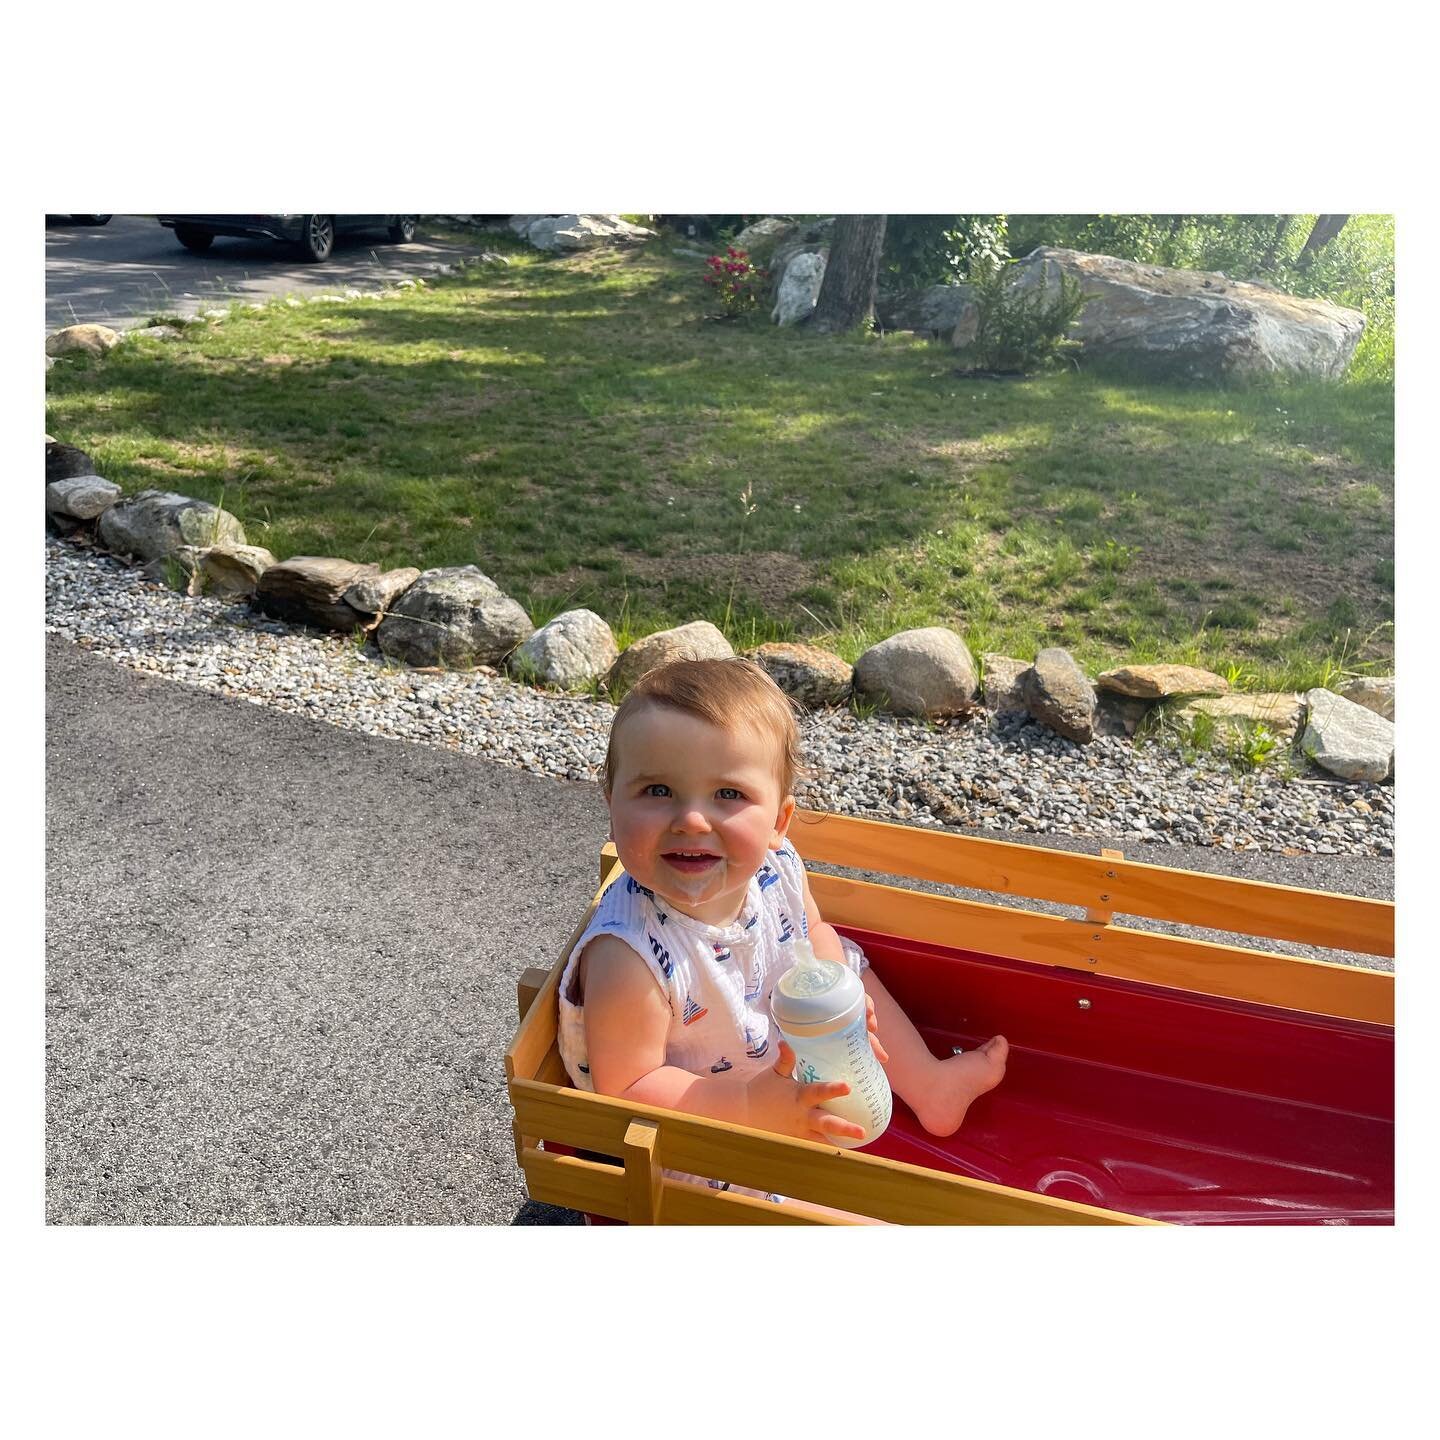 This little guy loves his new Radio flyer wagon! 
*
*
*
*
*
*
*
*
*
*
*
*
*
*
*
*

#dad #dadlife #dadlifeisthebestlife #maine #dadandson #dadandsontime #lovewhereyoulive #lovewhatyoudo #babysmiles